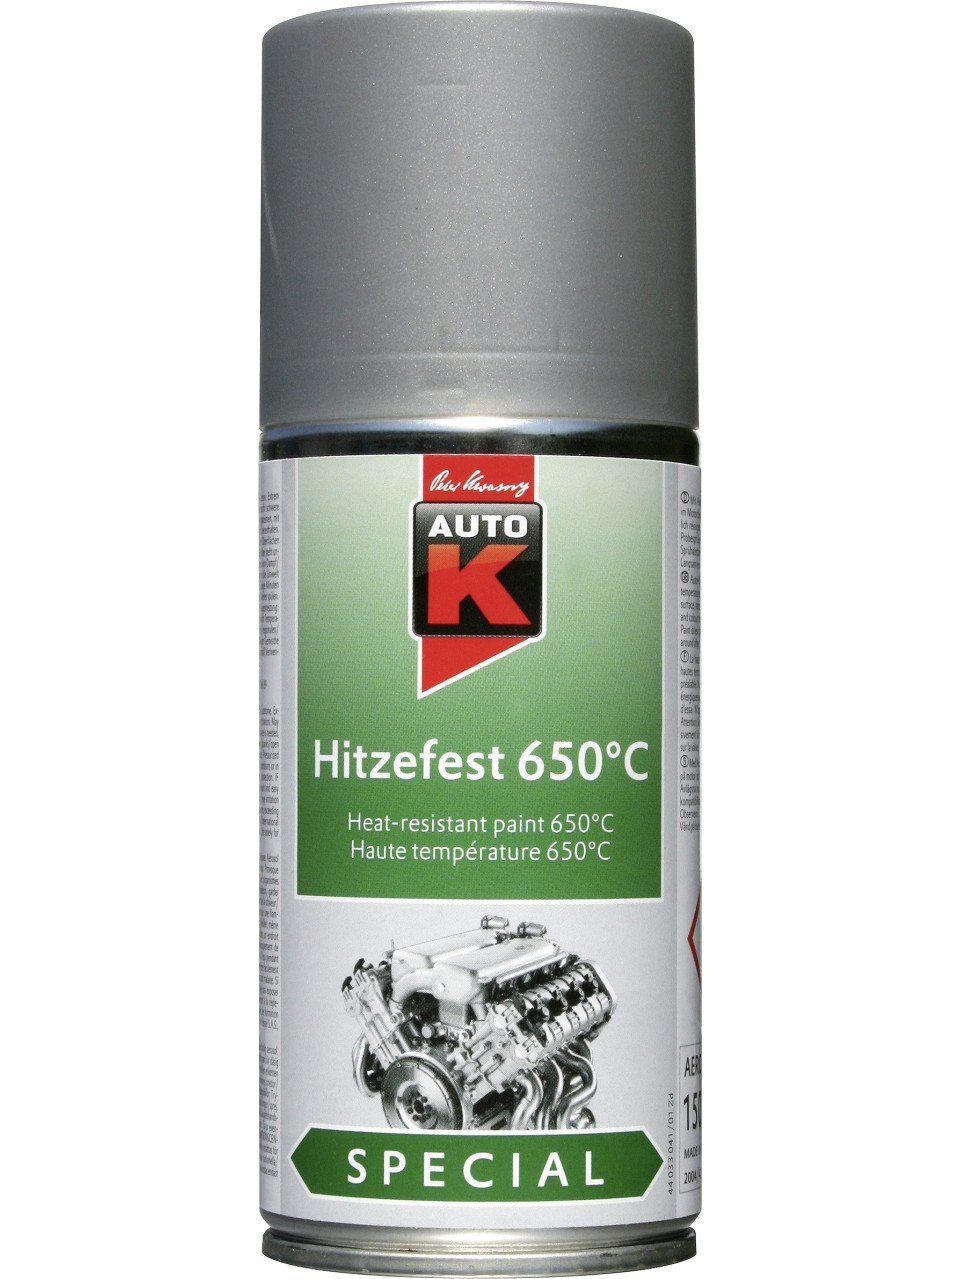 Auto-K Sprühlack Auto-K Hitzefest 650°C Special silber 150ml